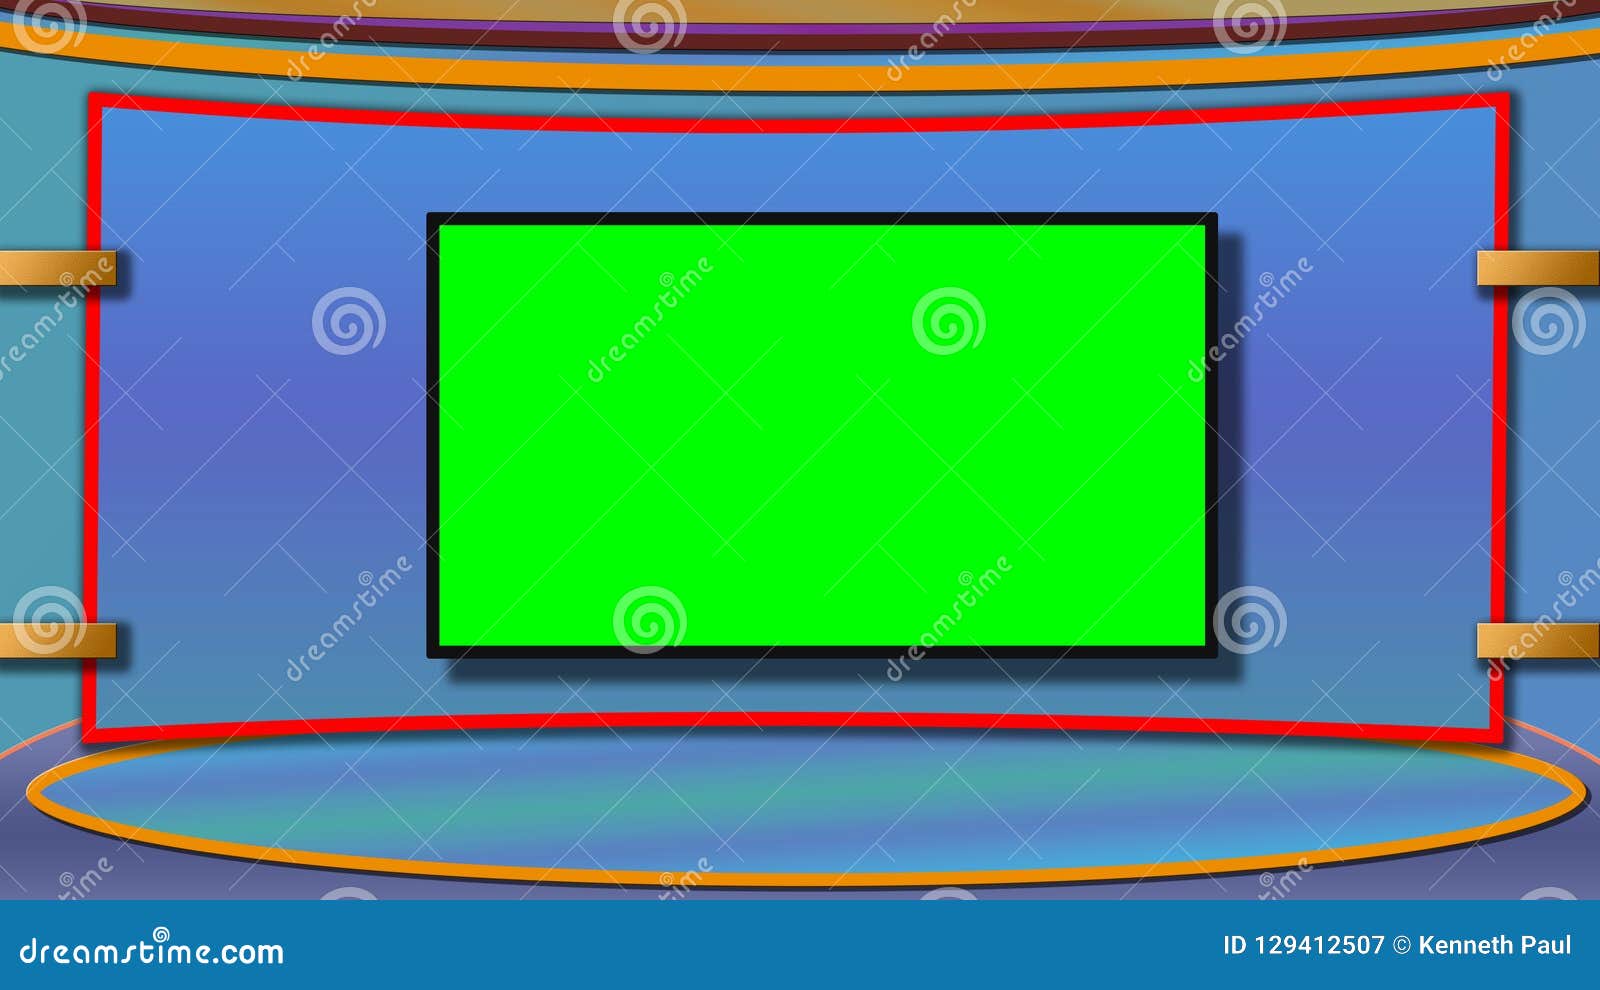 Tv News Studio Background With Greenscreen Stock Illustration Illustration Of Show Backdrop